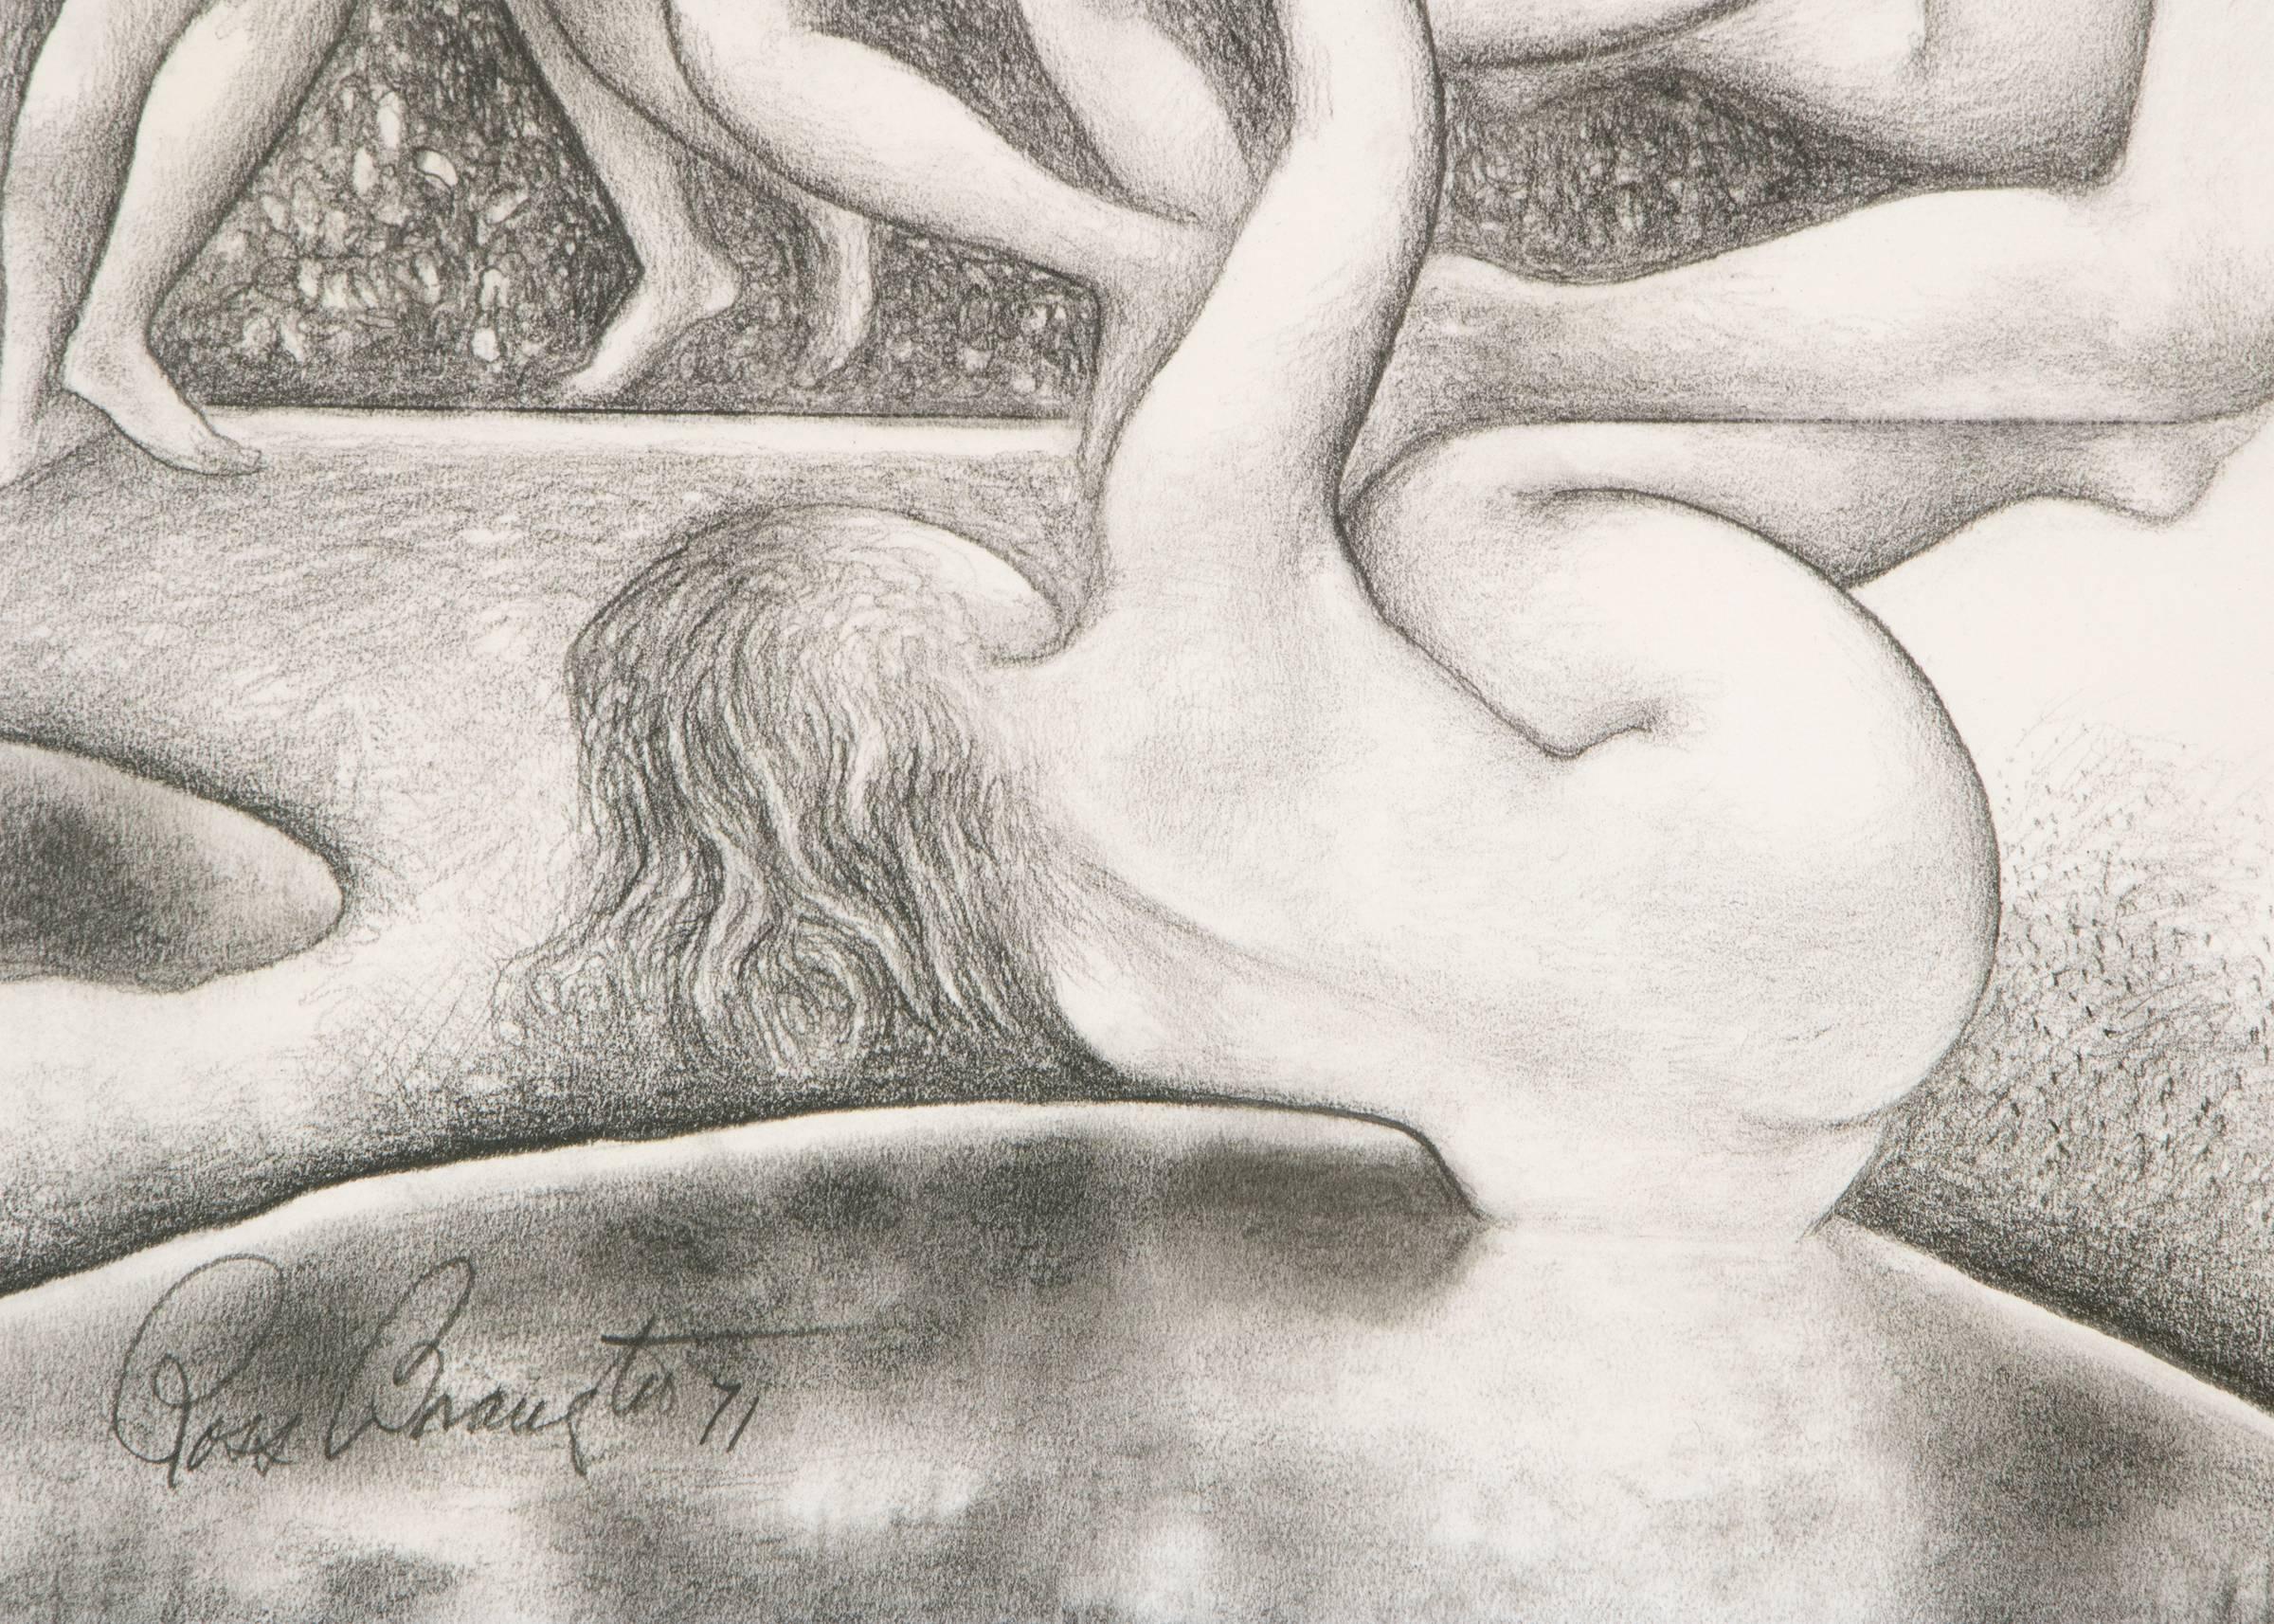 Nude Figures in Landscape (Black & White Modernist Composition) - American Modern Art by Ross Eugene Braught